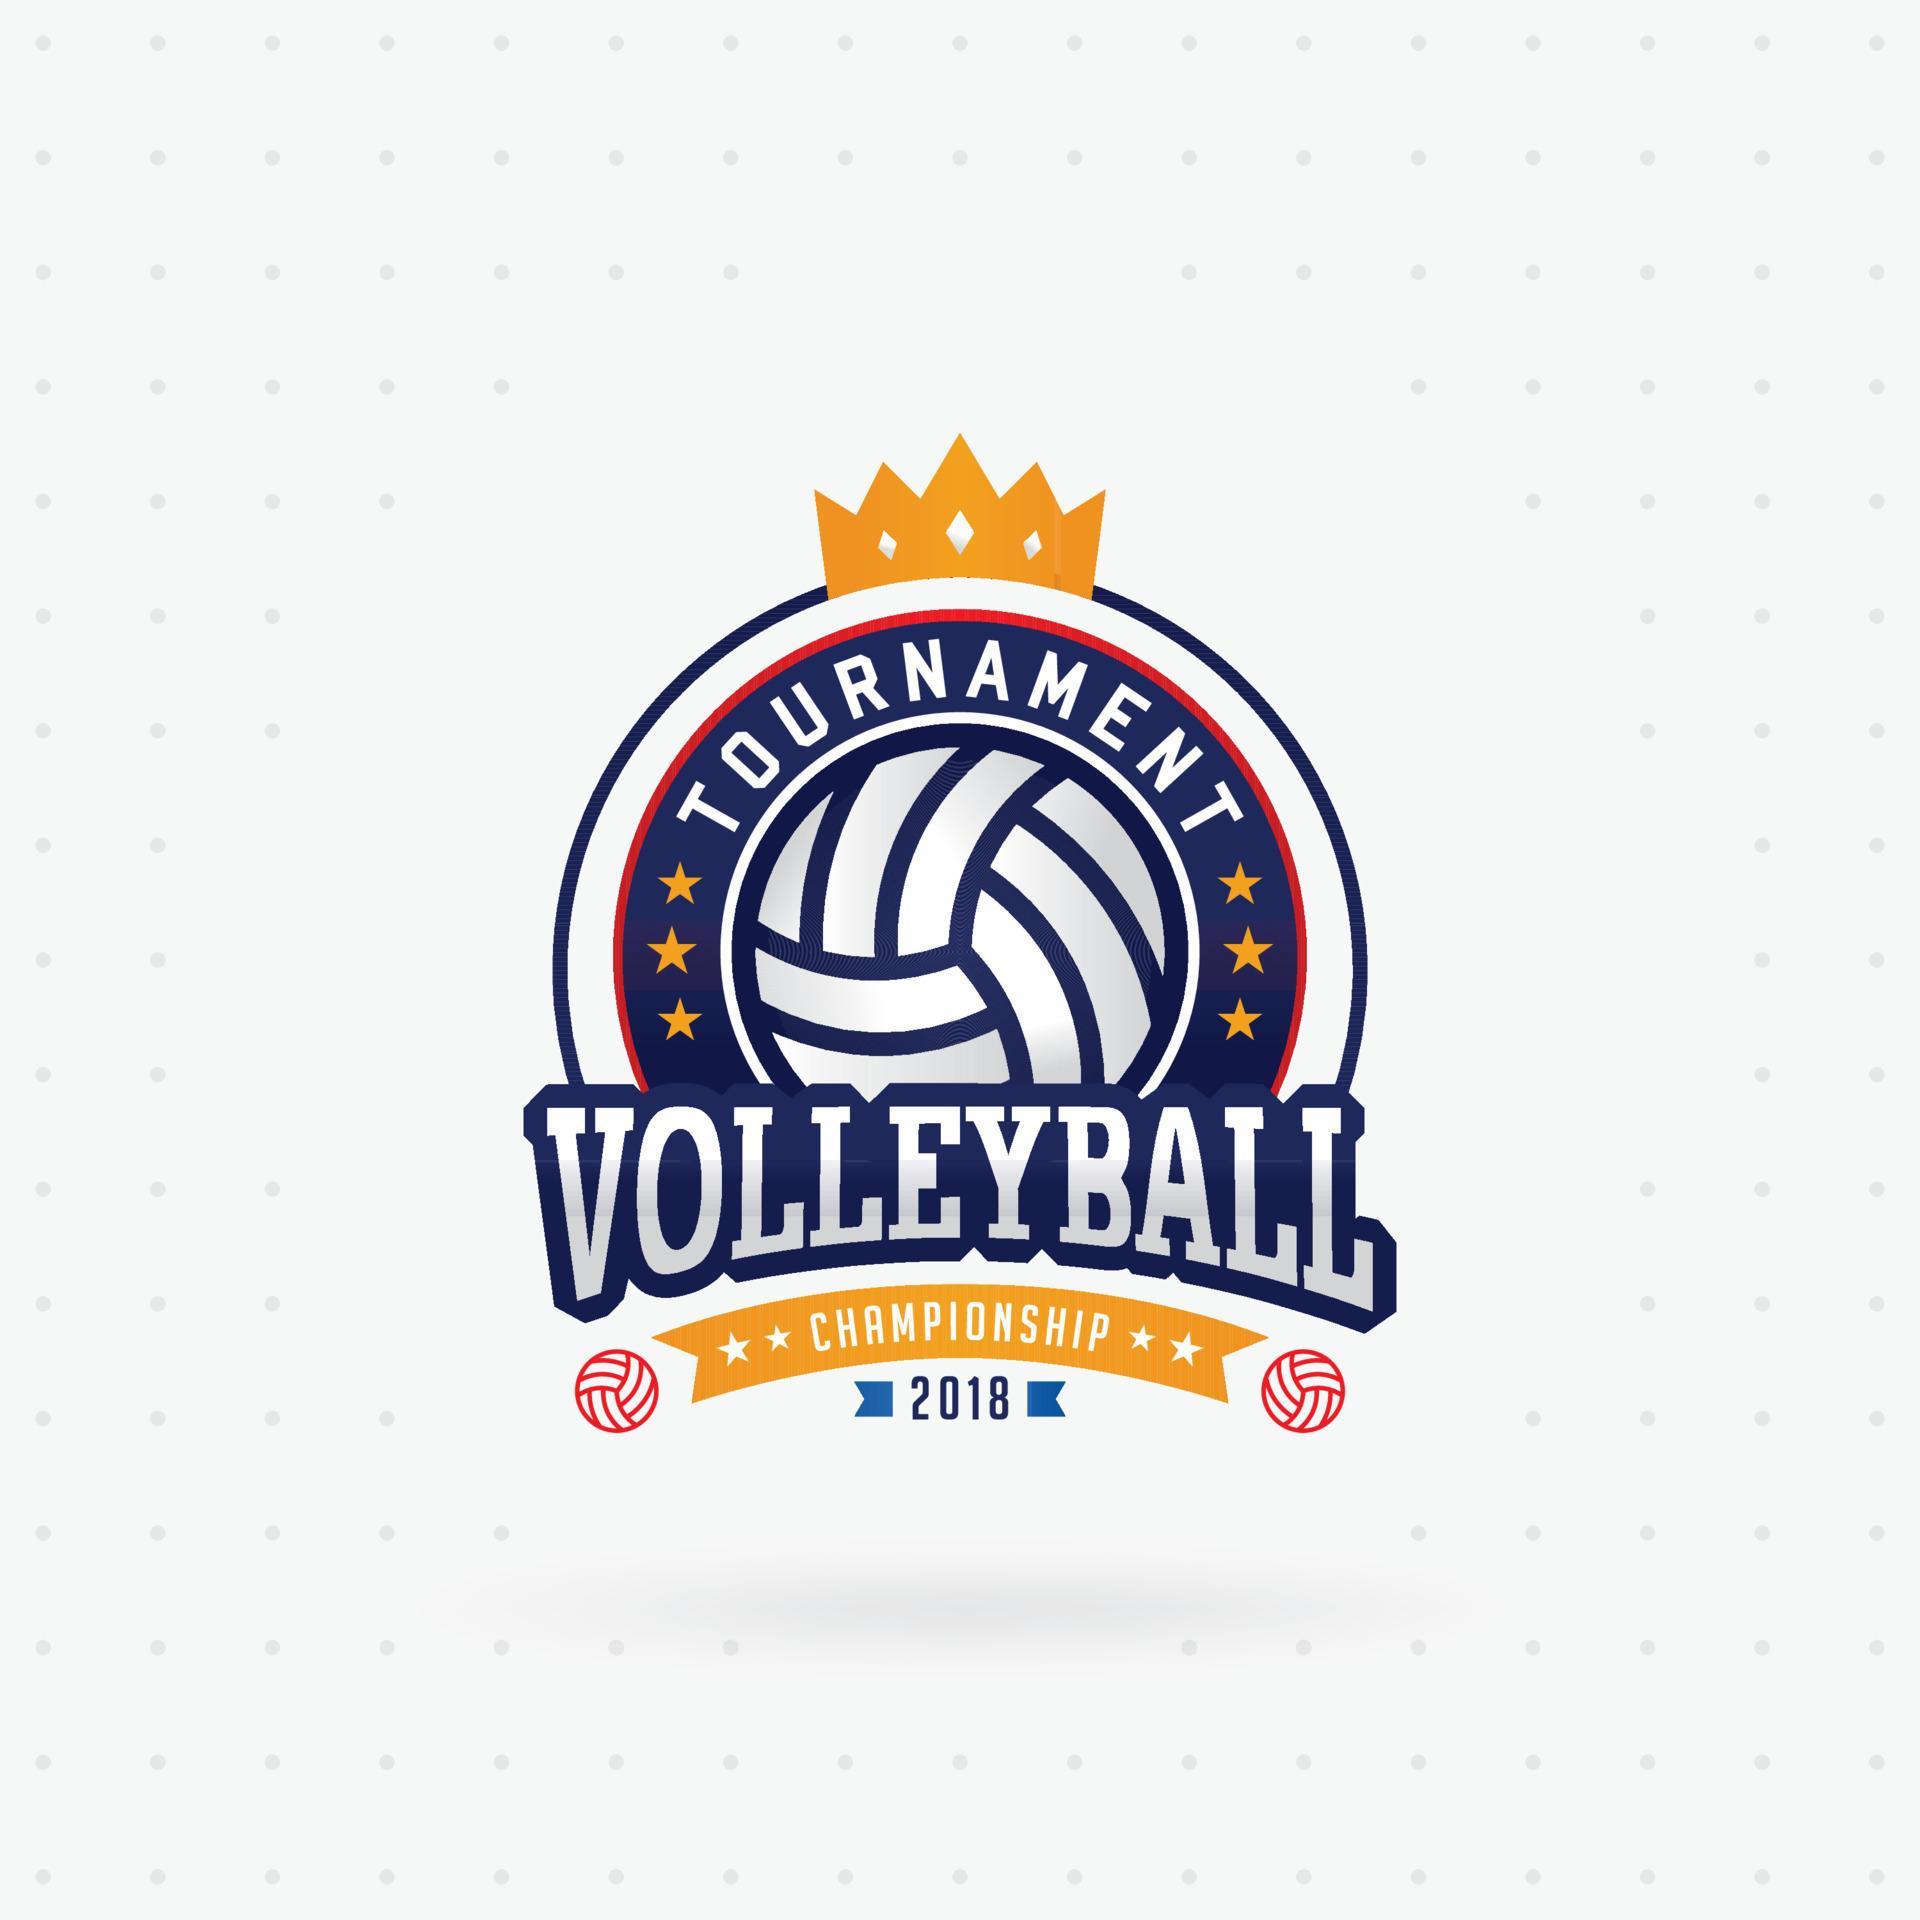 Volleyball tournament logo 6788964 Vector Art at Vecteezy